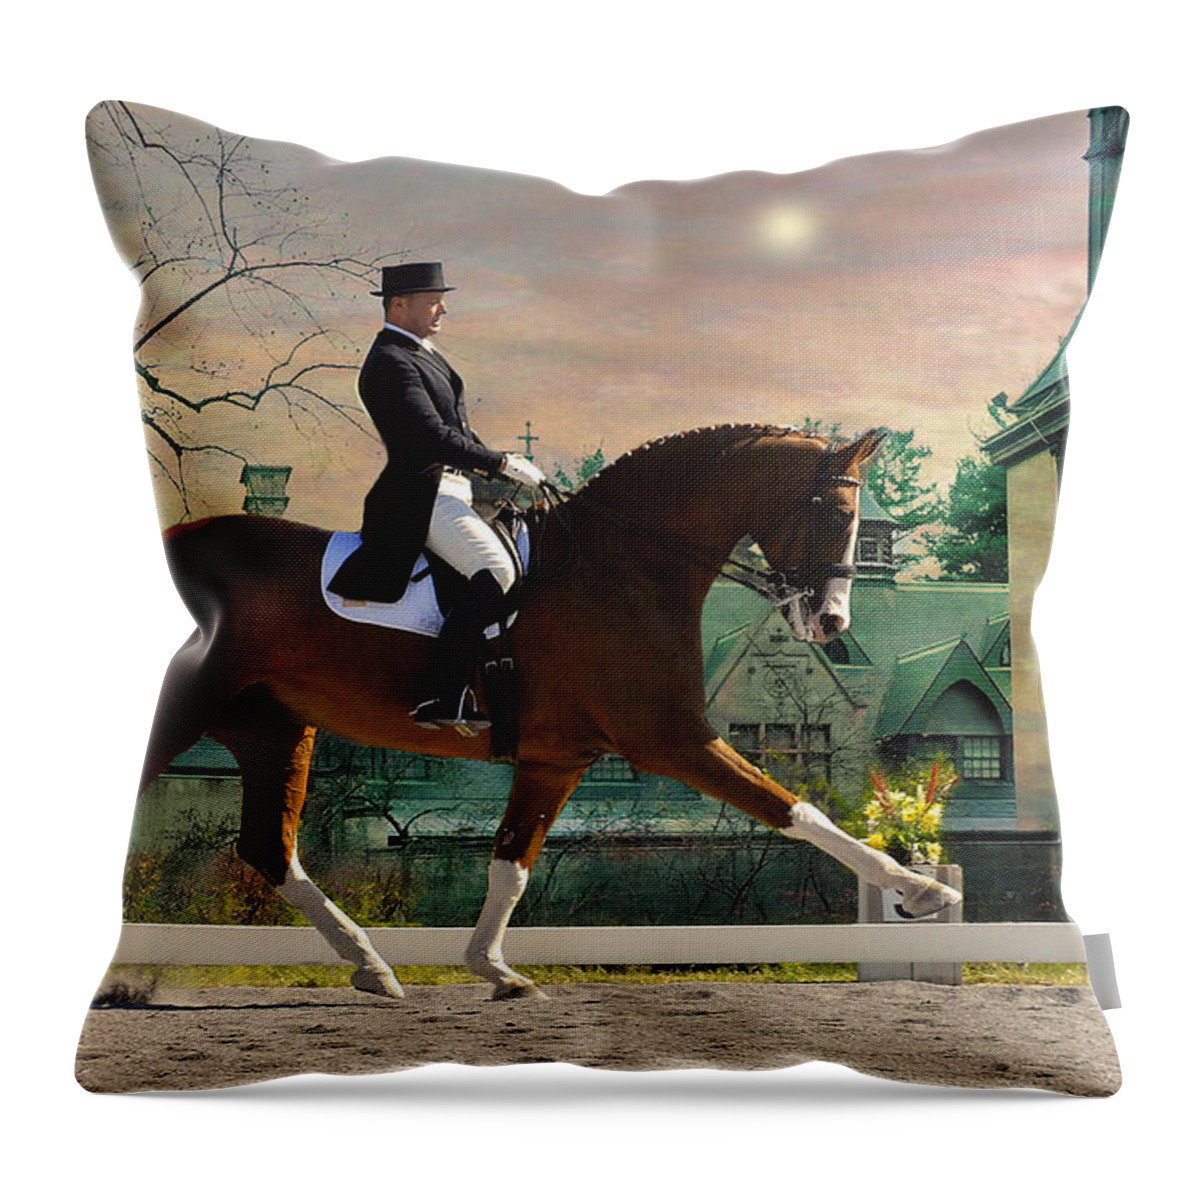 Horses Throw Pillow featuring the photograph Art of Dressage by Fran J Scott